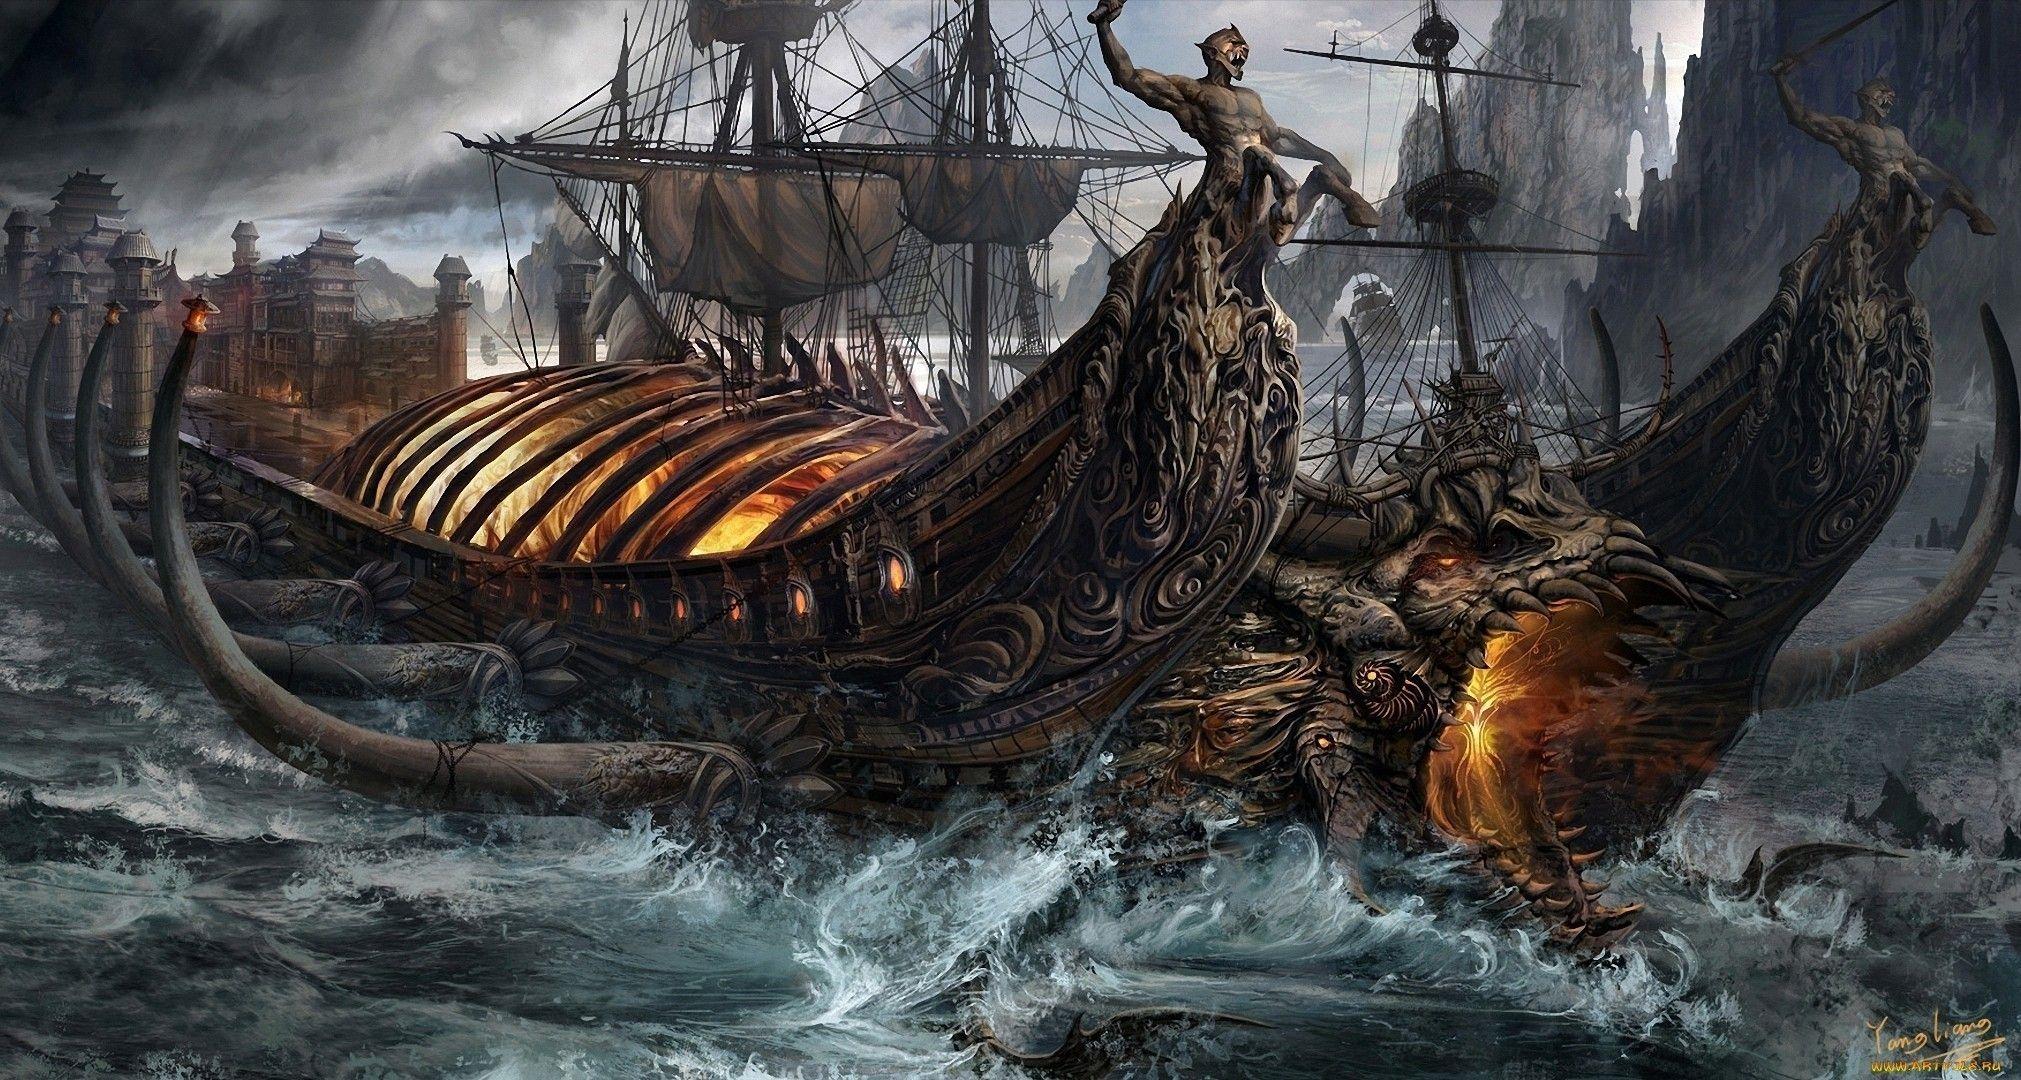 Featured image of post Norse Mythology Viking Ship Wallpaper : Vintage nautical sailing boat viking ships clipart lineart illustration instant download png jpg digi line art image drawing l437.